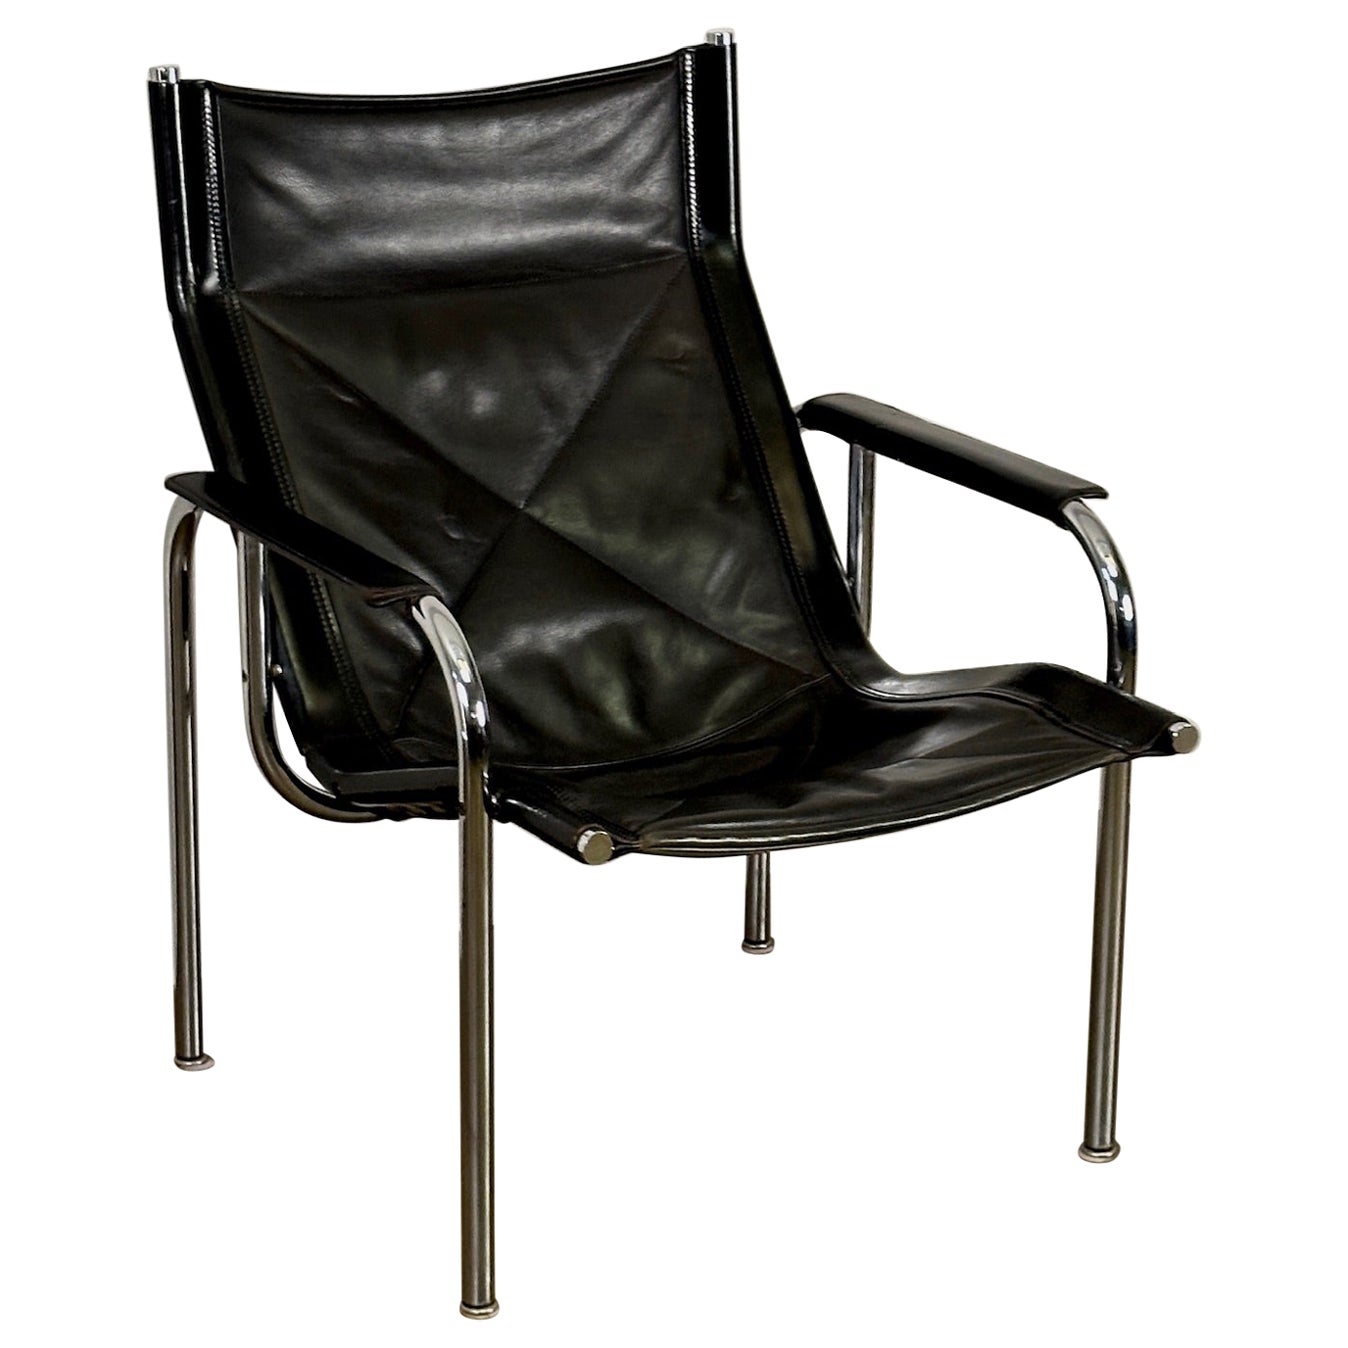 Hans Eichenberger Lounge Chairs